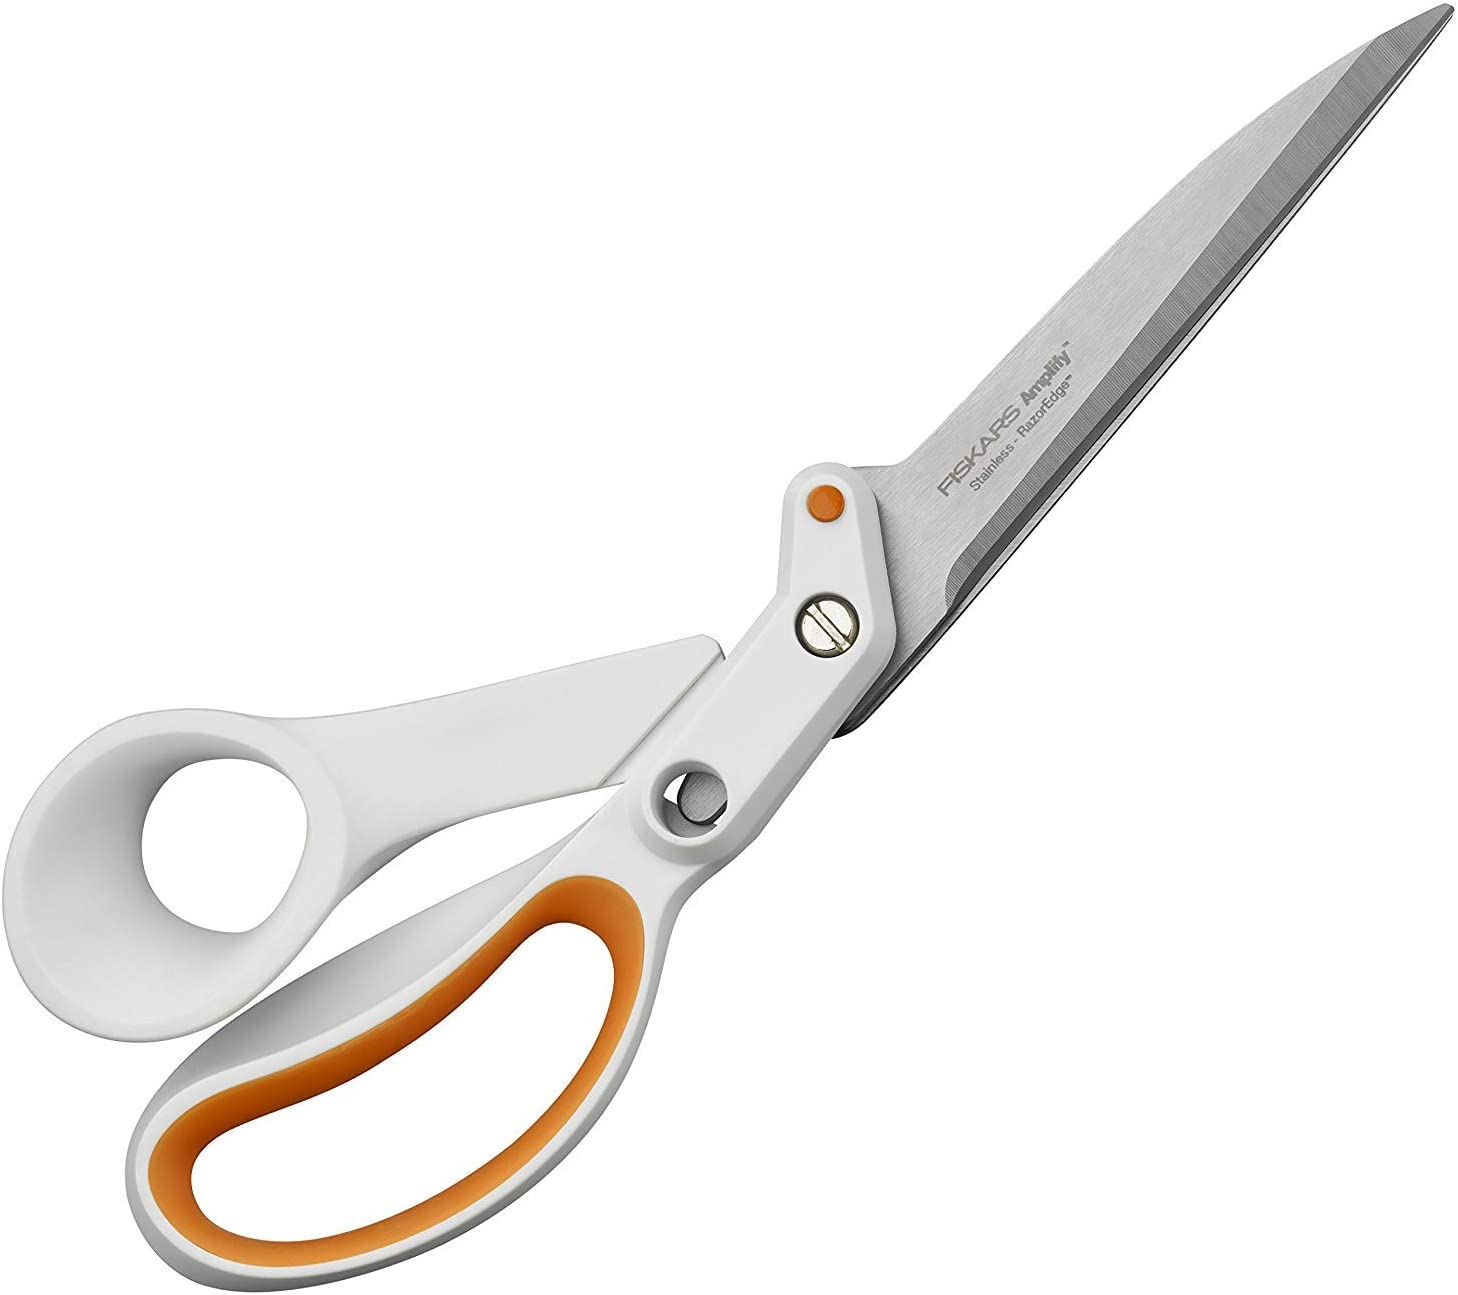 Fiskars Razor Edge All Purpose 24 cm Scissors, Stainless Steel Blade/Plastic Handles, White/Orange